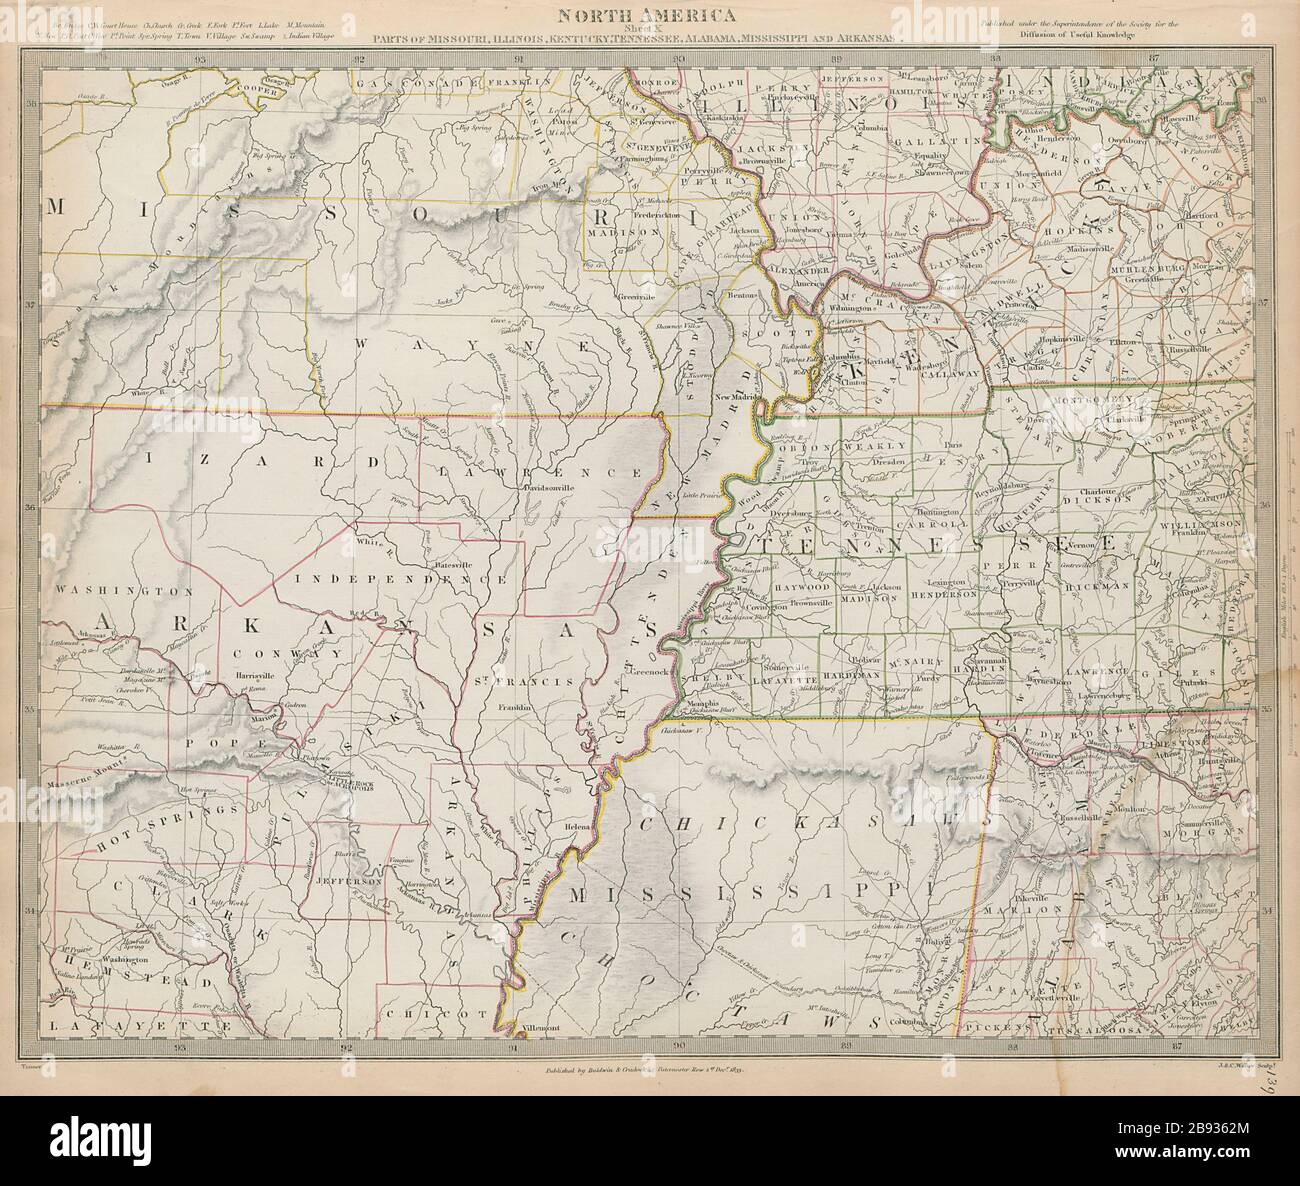 Mississippi basin. Arkansas Missouri. Choctaw Chickasaw boundaries SDUK 1844 map Stock Photo